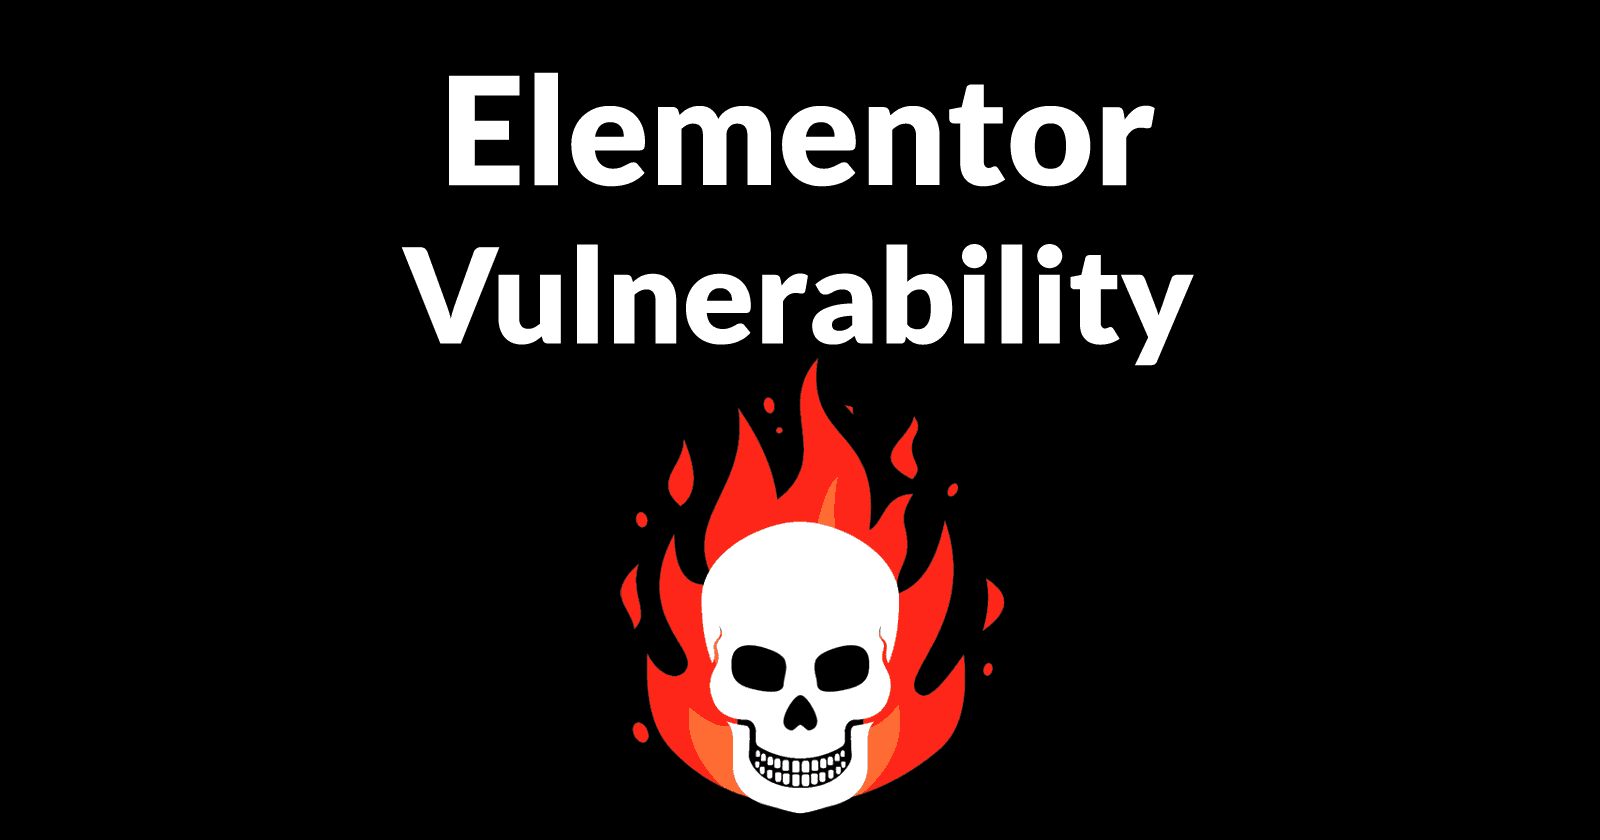 Elementor vulnerability